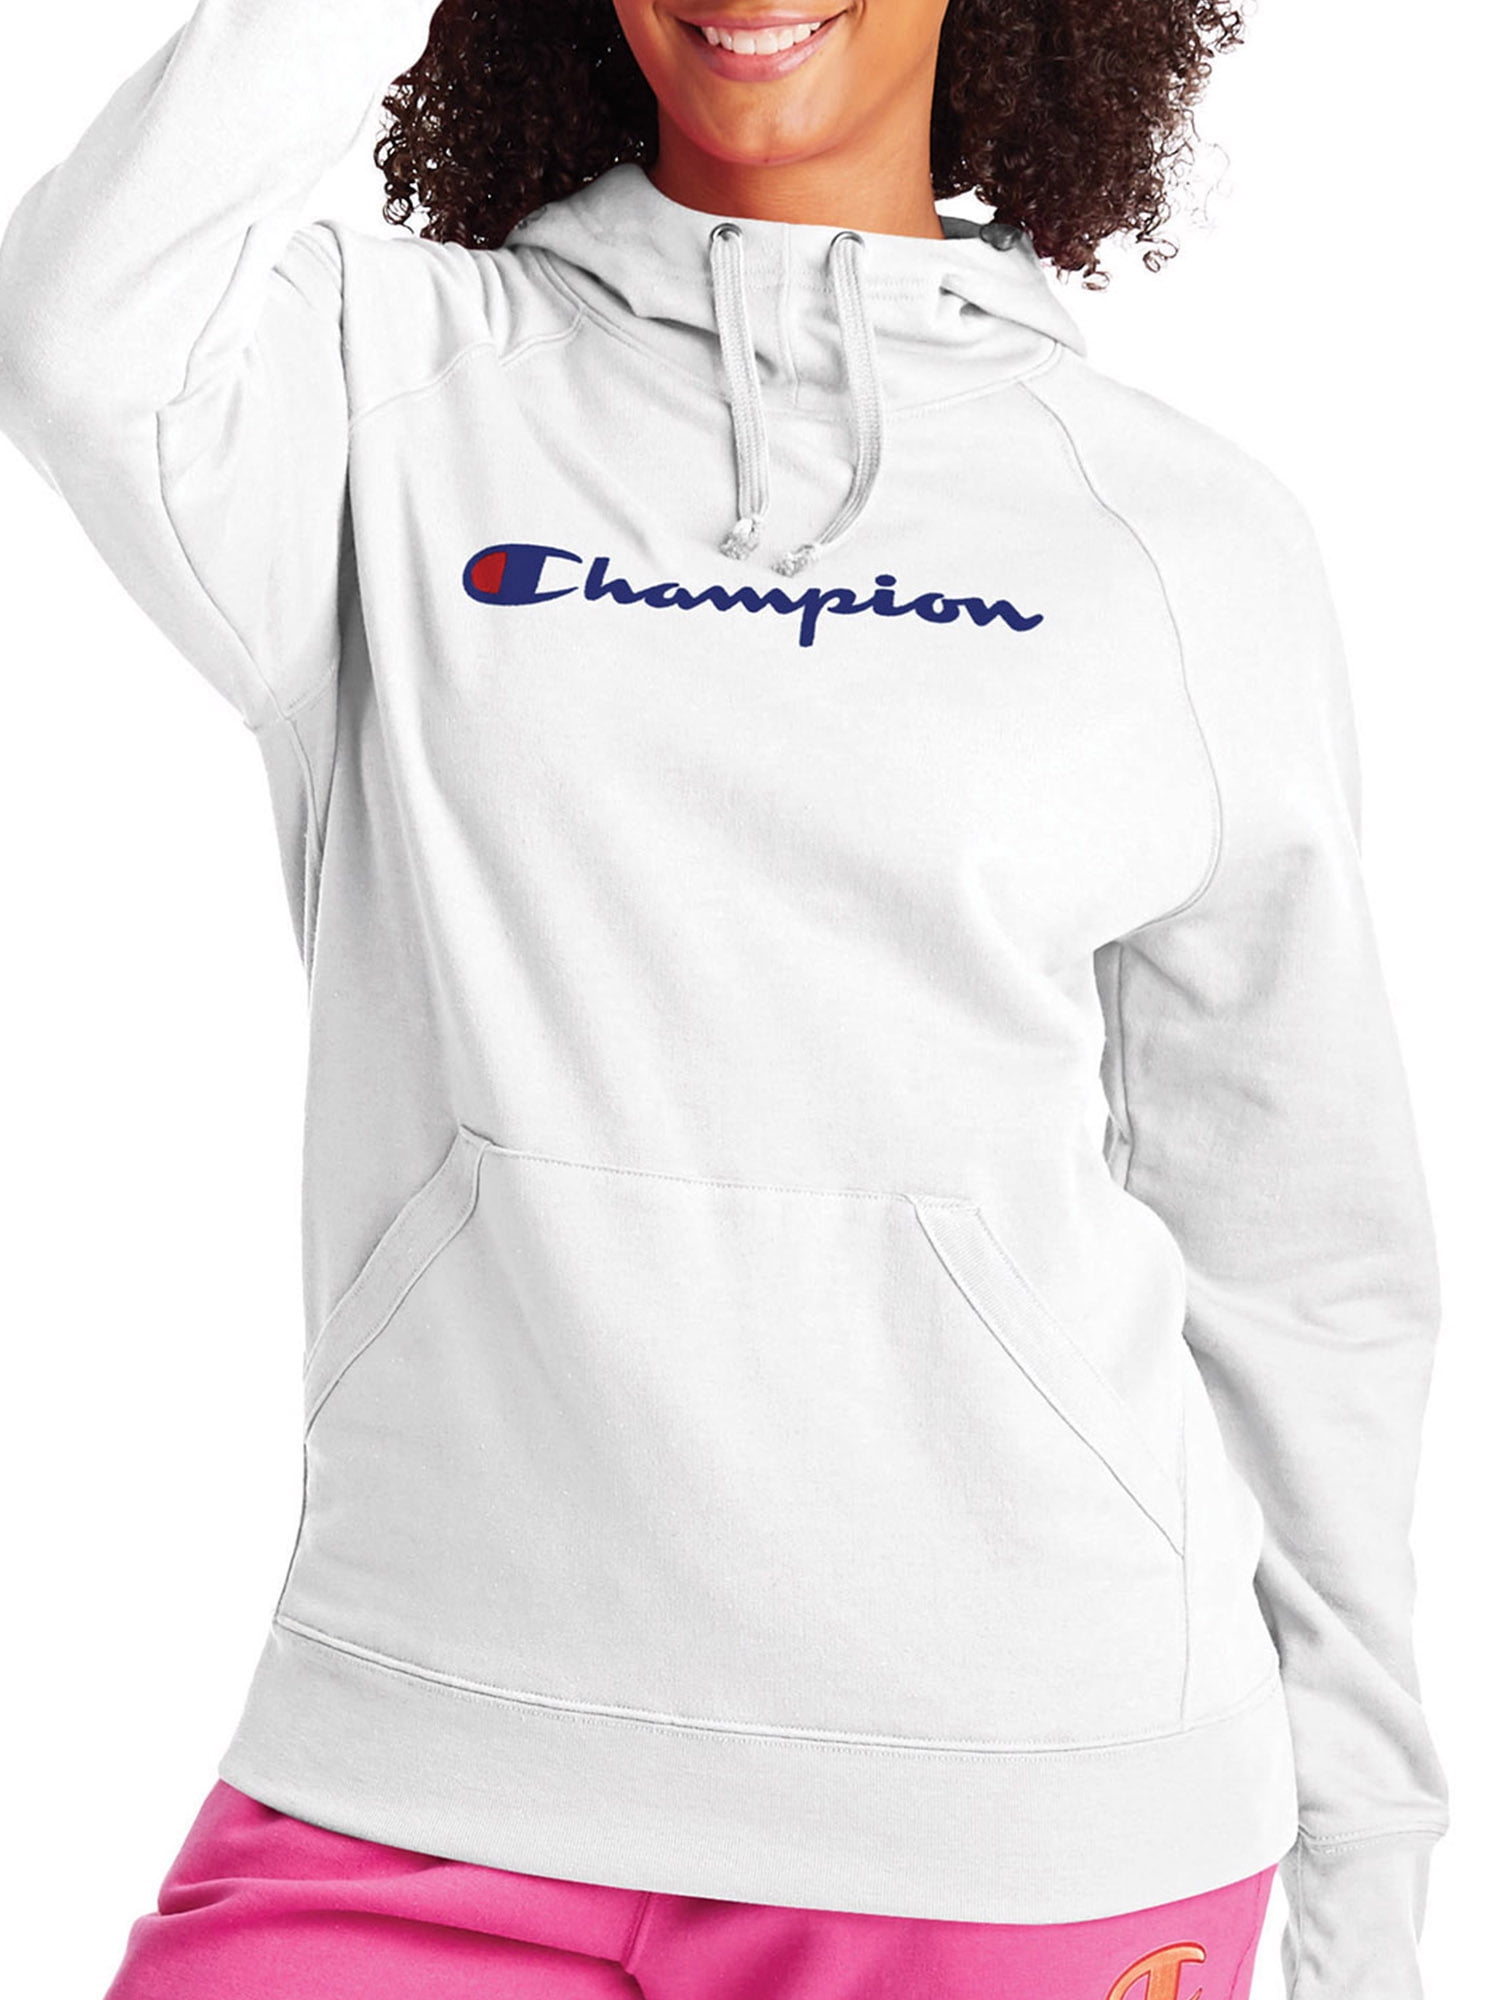 Champion Hoodie Women's Sweatshirt Powerblend Full Zip Scuba hood Pockets XS-2XL 